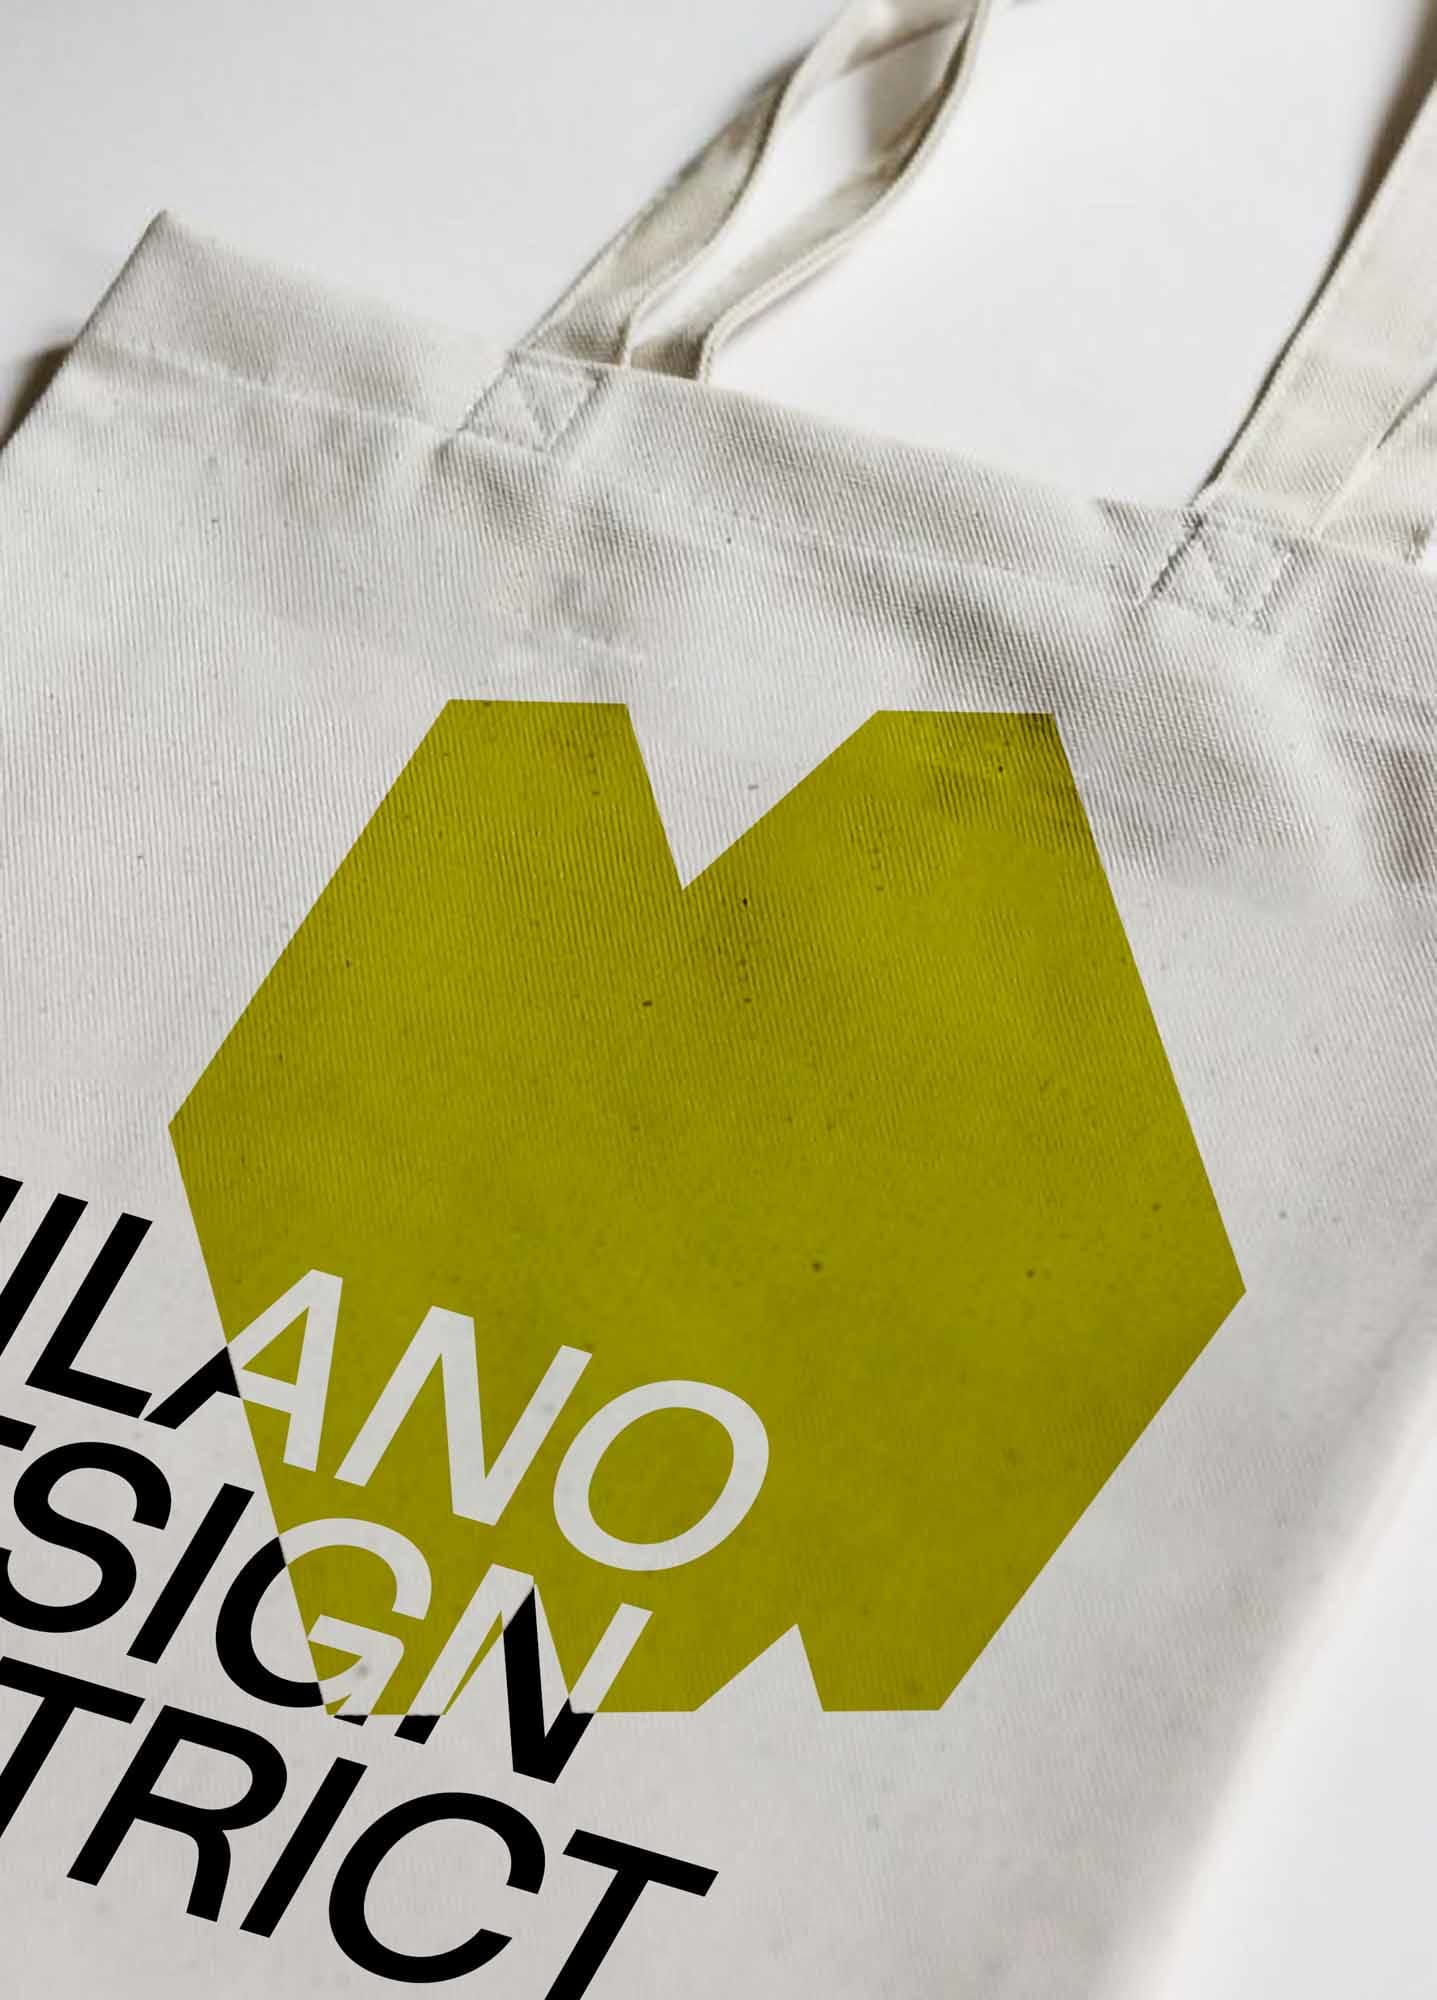 Milano Design District: generative and dynamic identity proposal | Pietro Forino